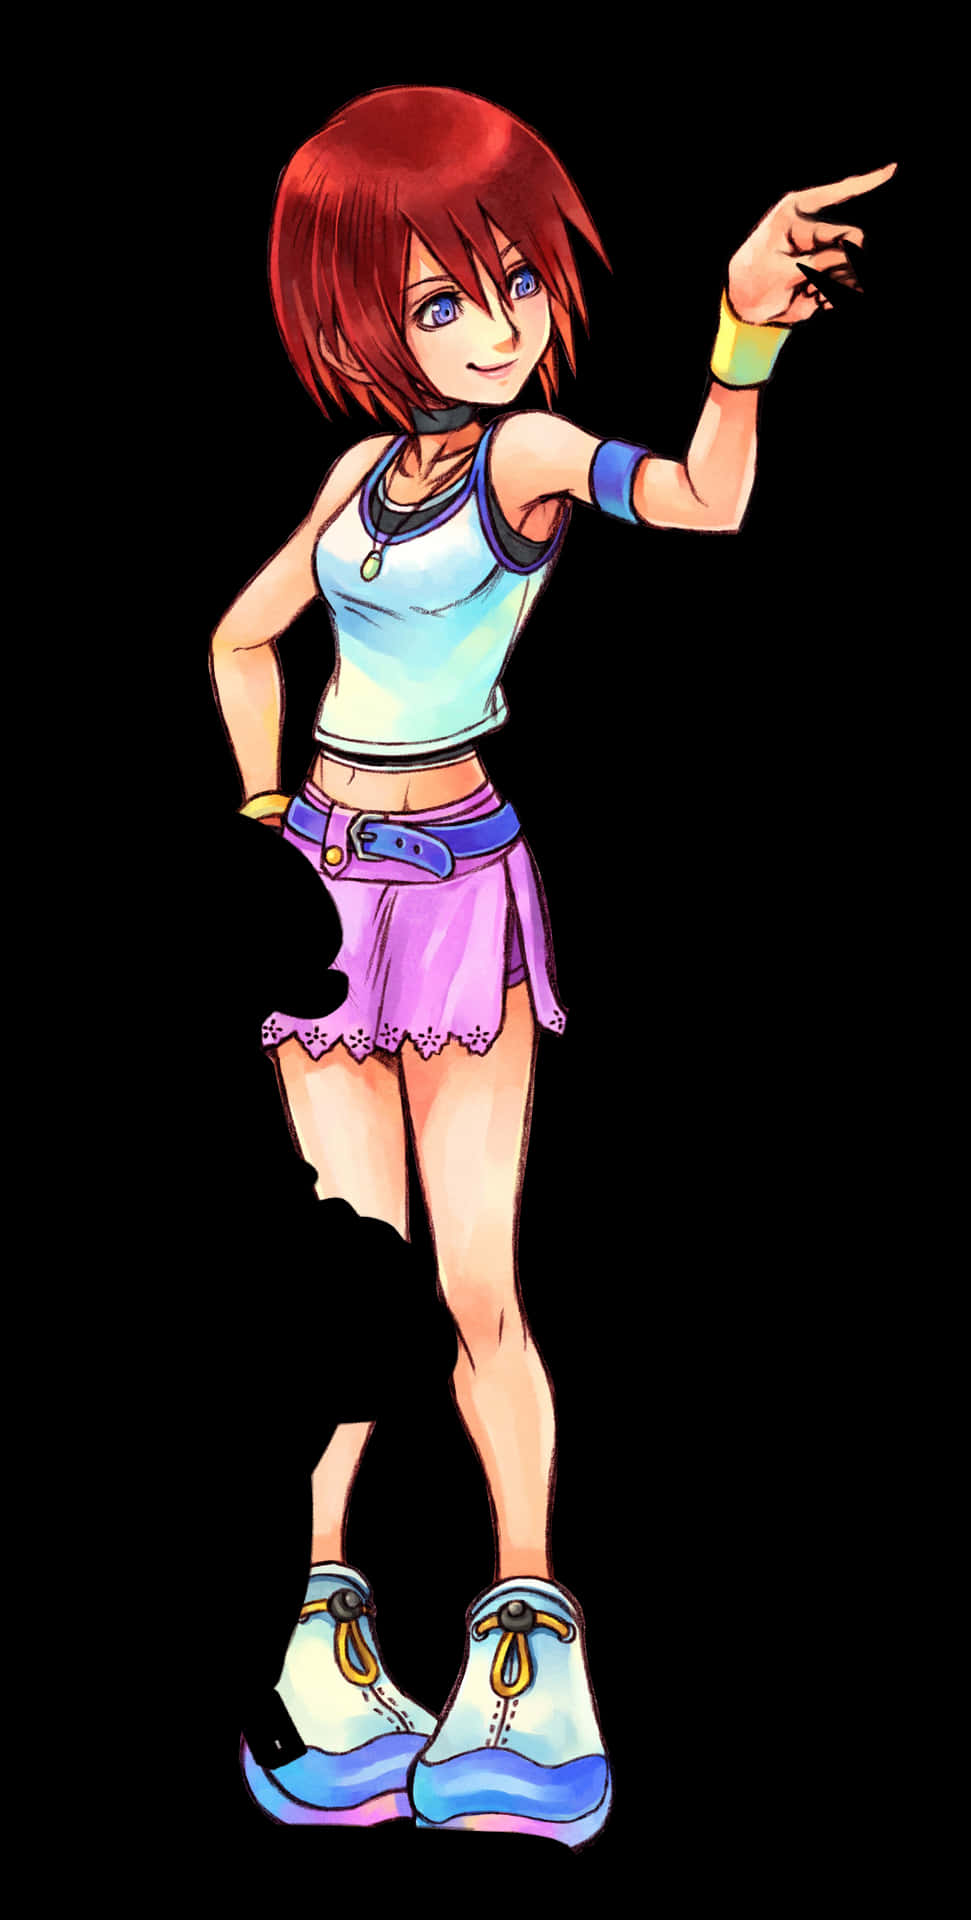 Kairi from Kingdom Hearts gracefully holding her Keyblade. Wallpaper